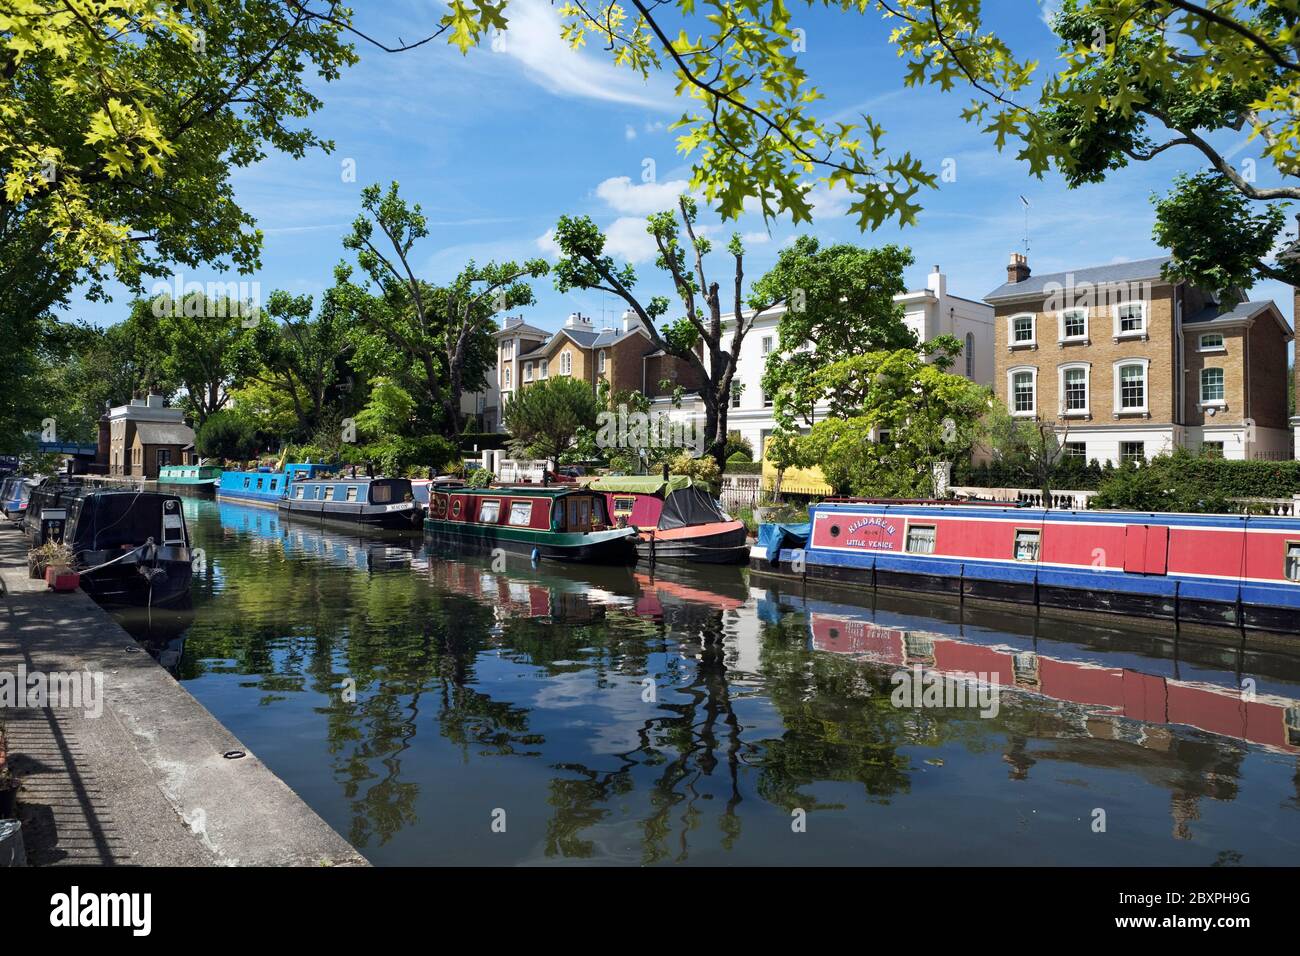 Regents Canal running through Little Venice, London, United Kingdom Stock Photo